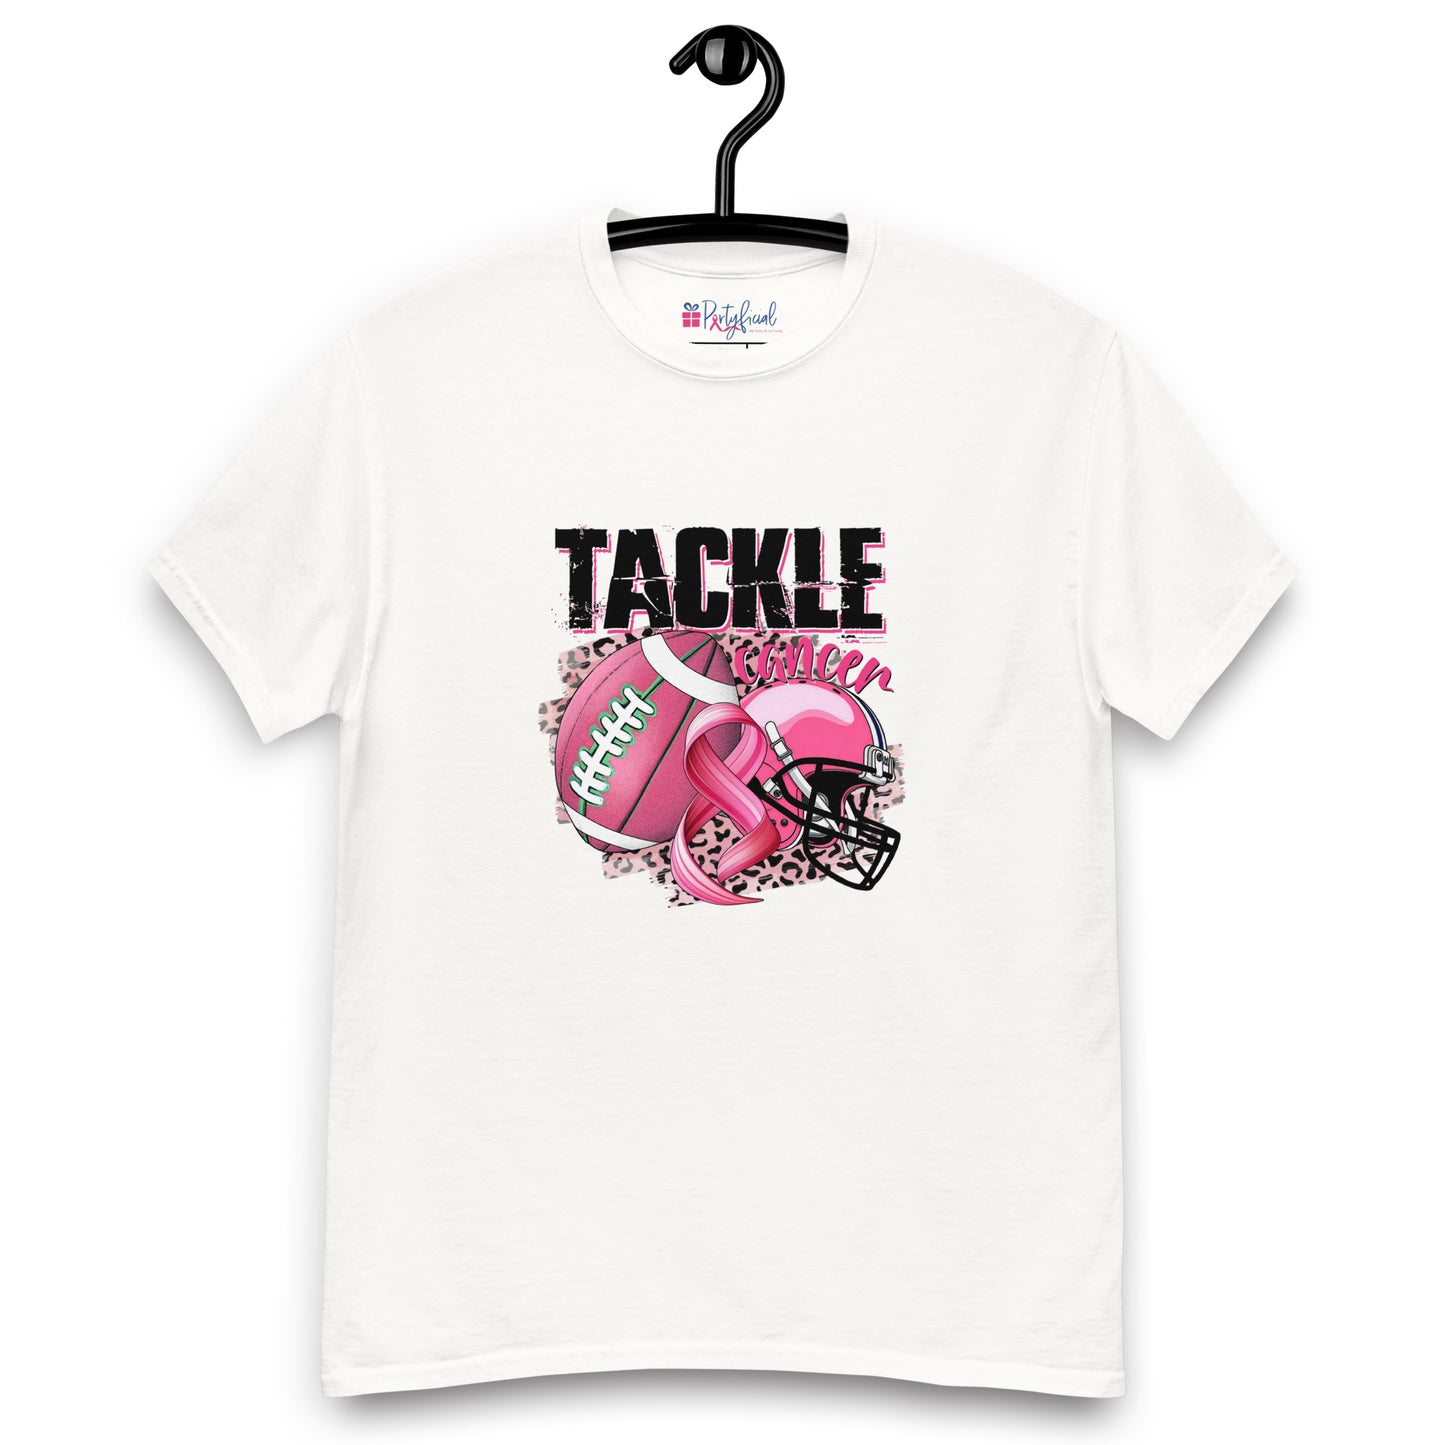 Tackle Cancer T-Shirt